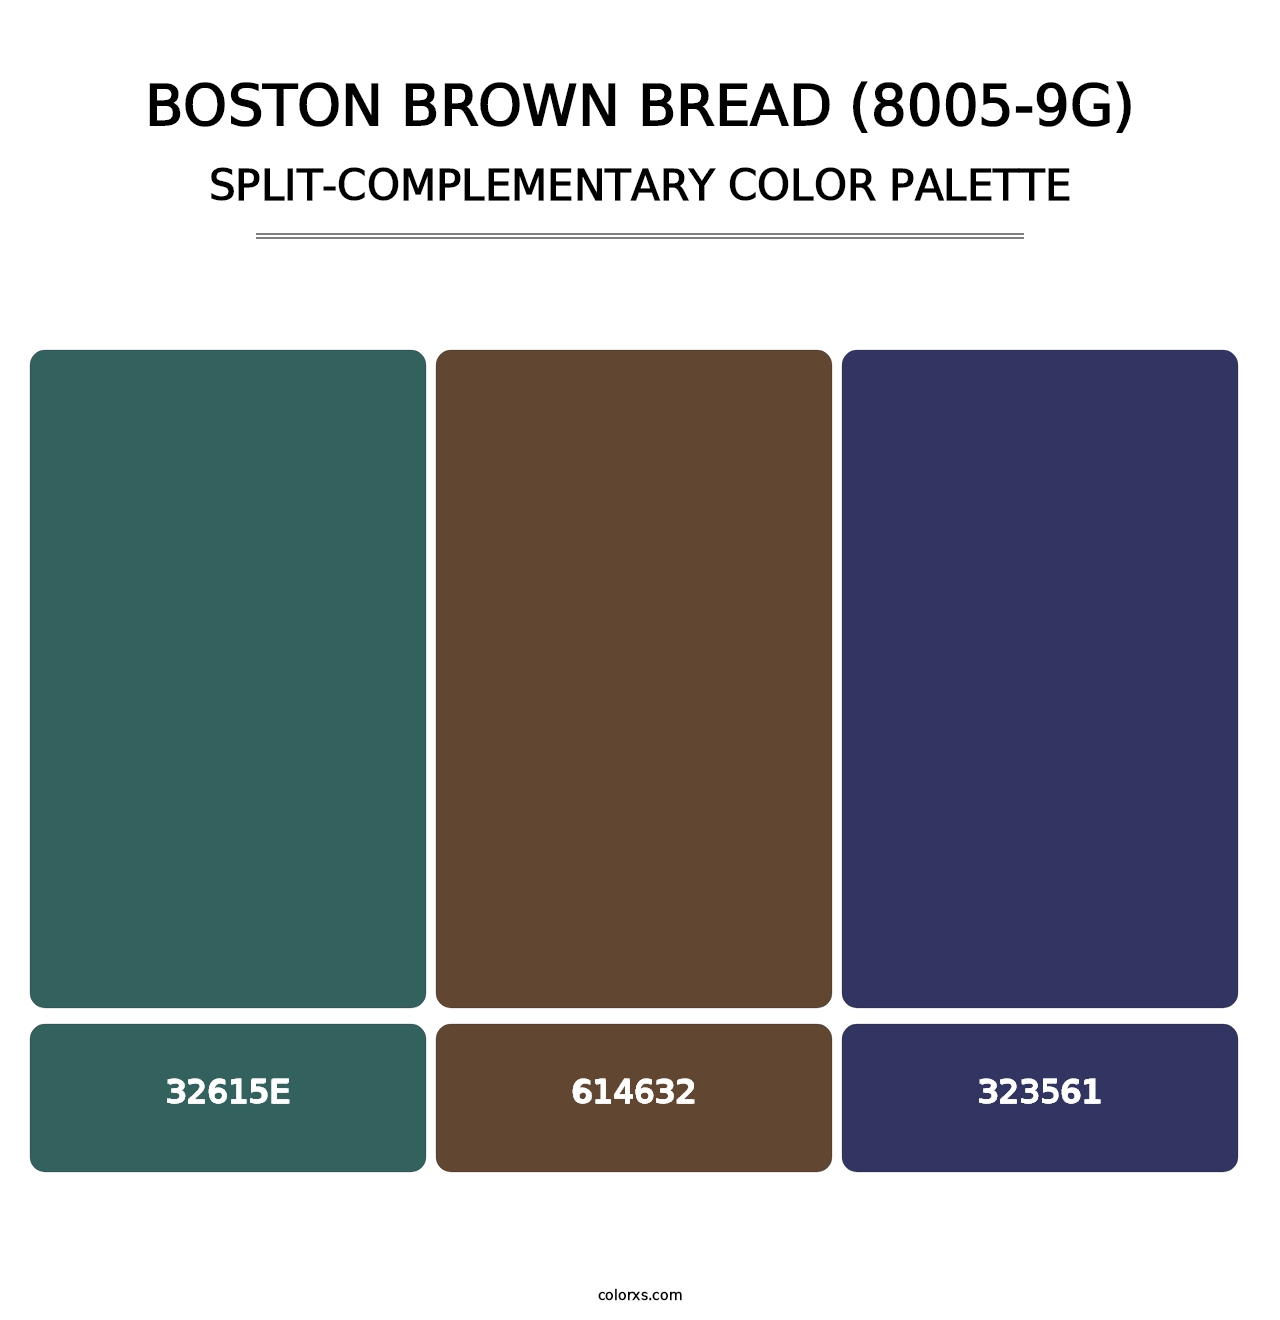 Boston Brown Bread (8005-9G) - Split-Complementary Color Palette